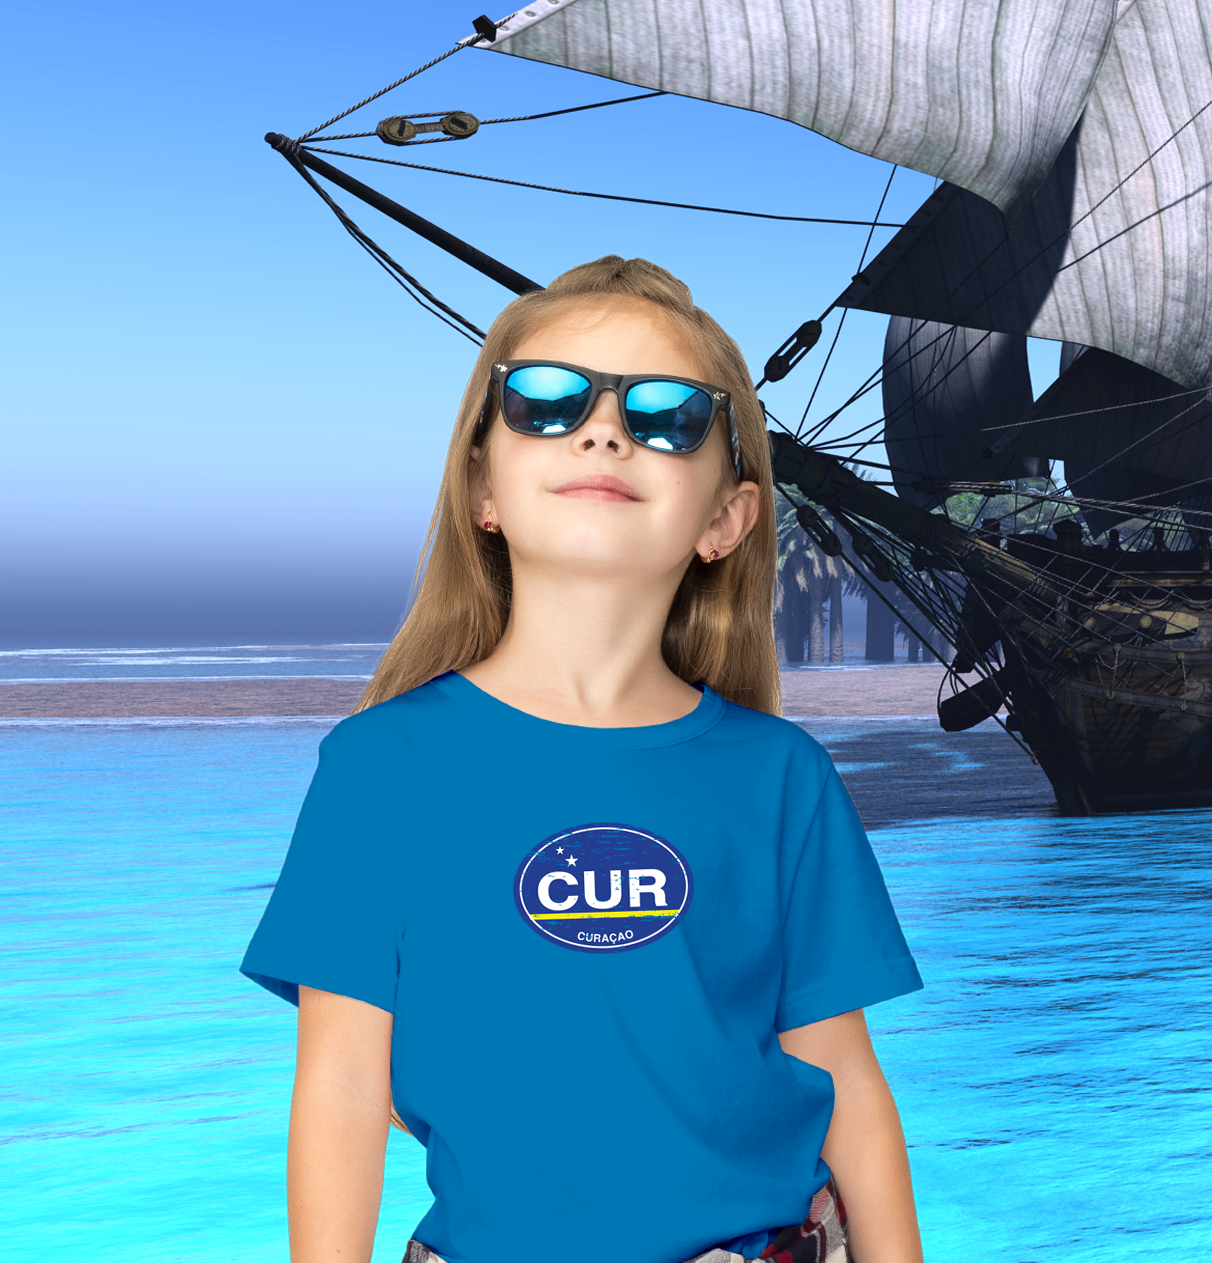 Curacao Flag Youth T-Shirt - My Destination Location